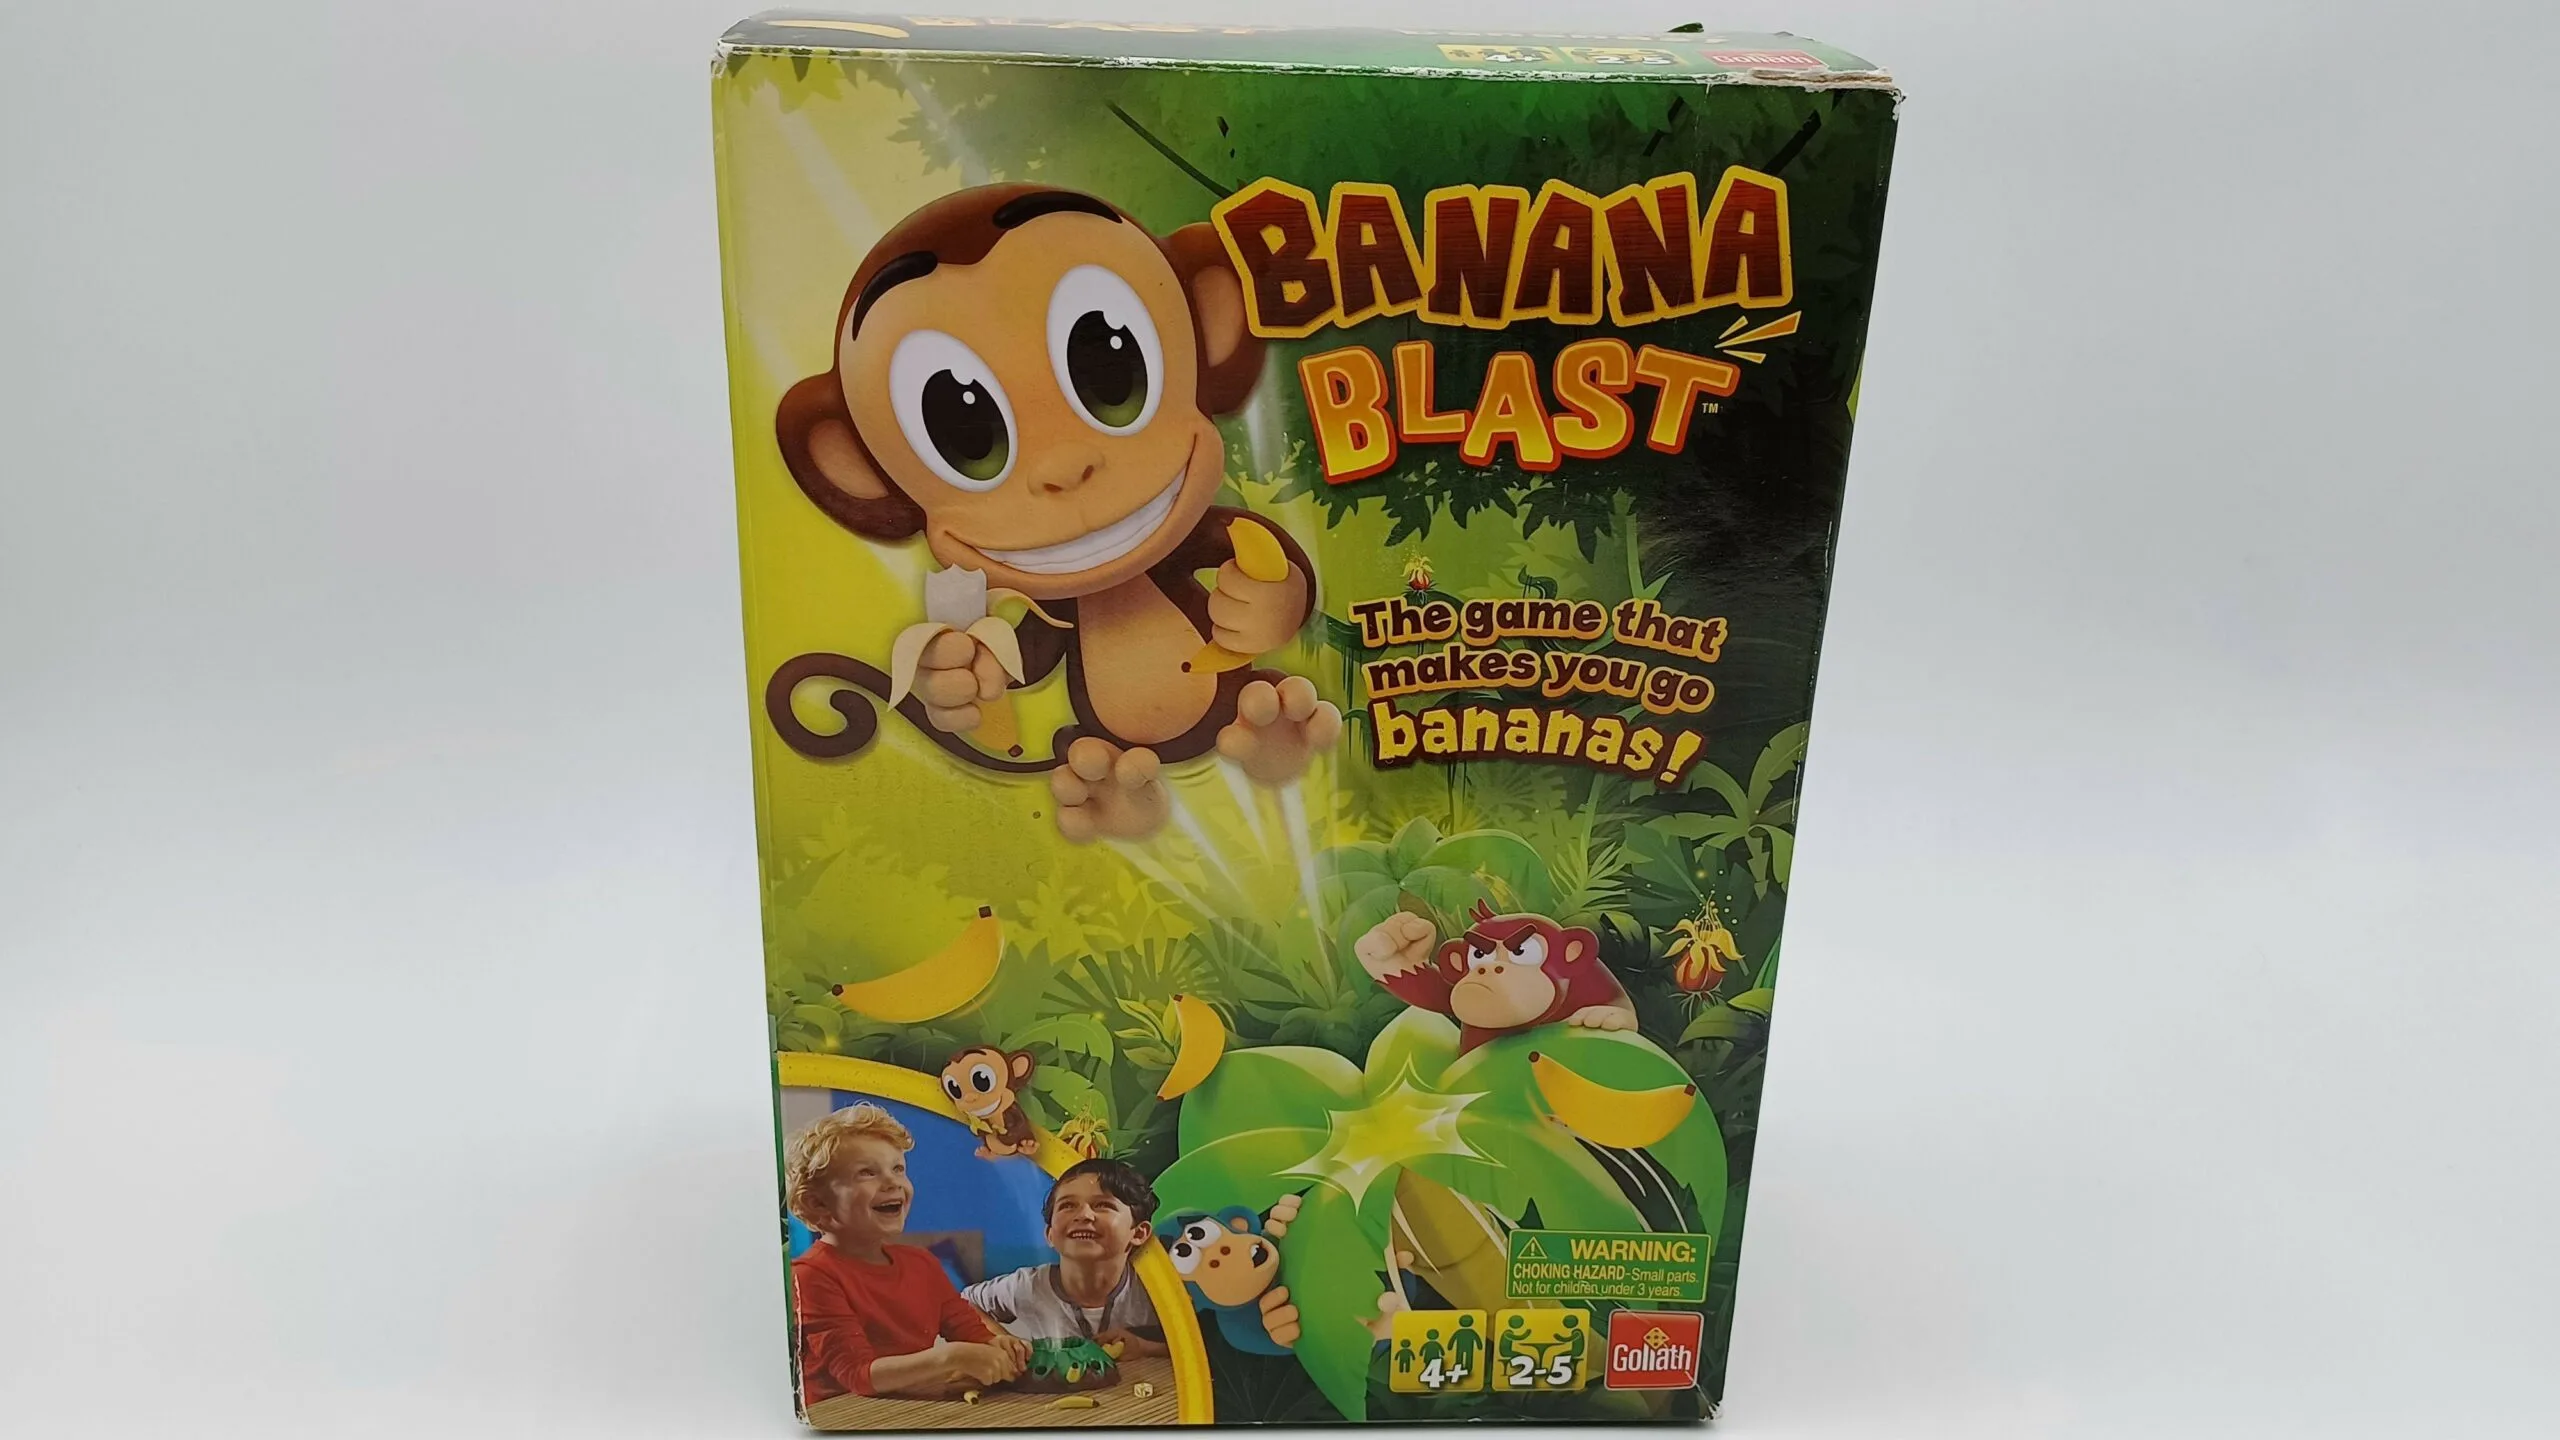 Box for Banana Blast